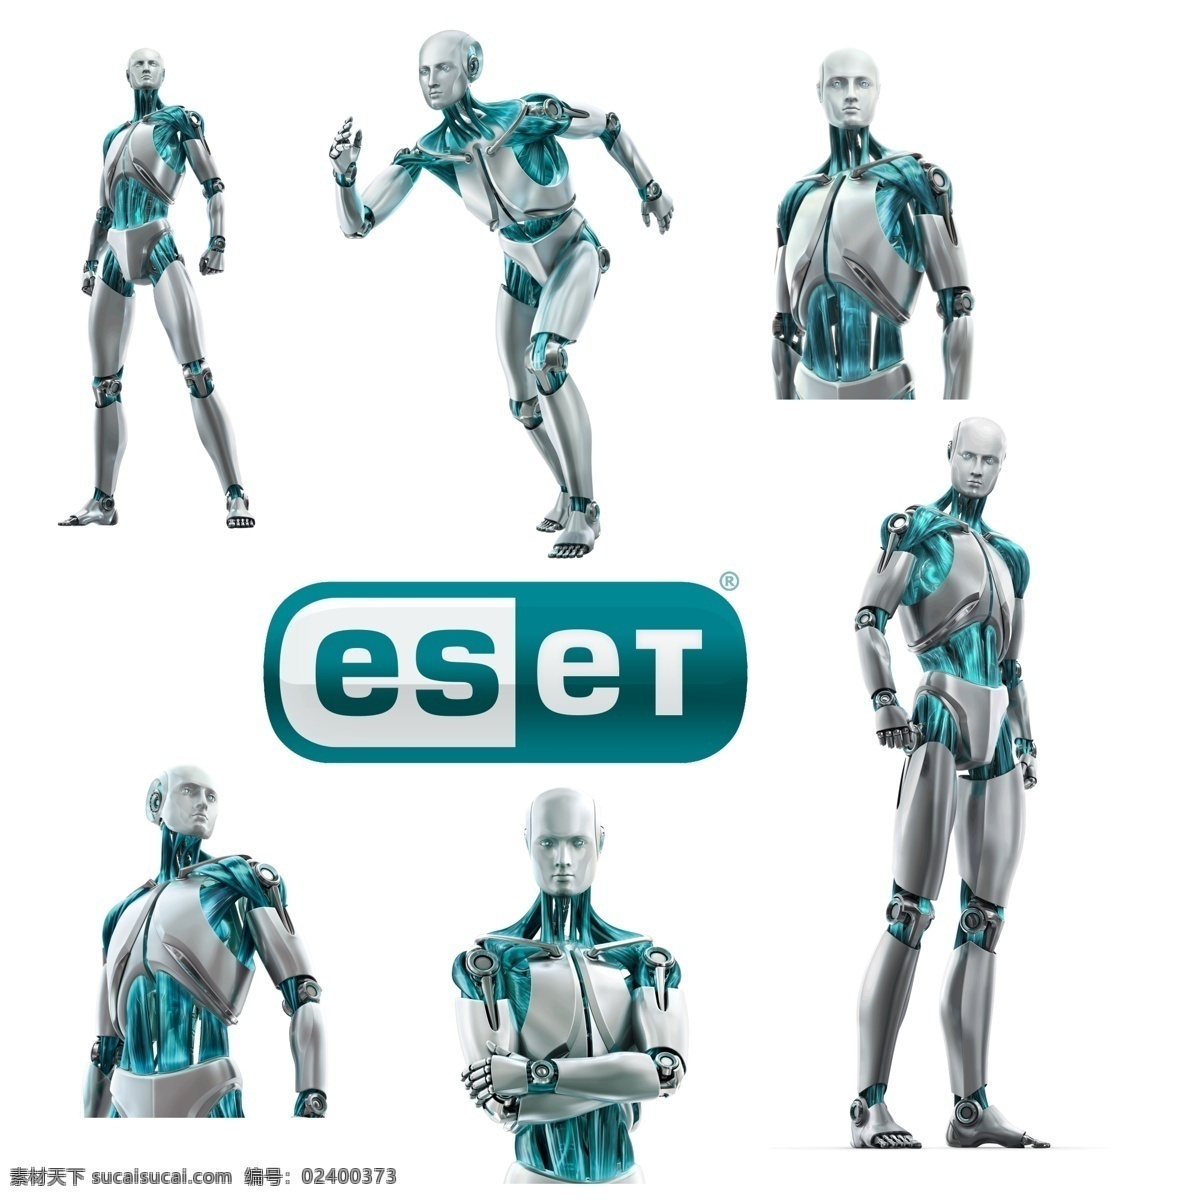 eset 机器人 nod32 logo 标志 杀毒软件 软件 源文件 分层素材 图标 分层